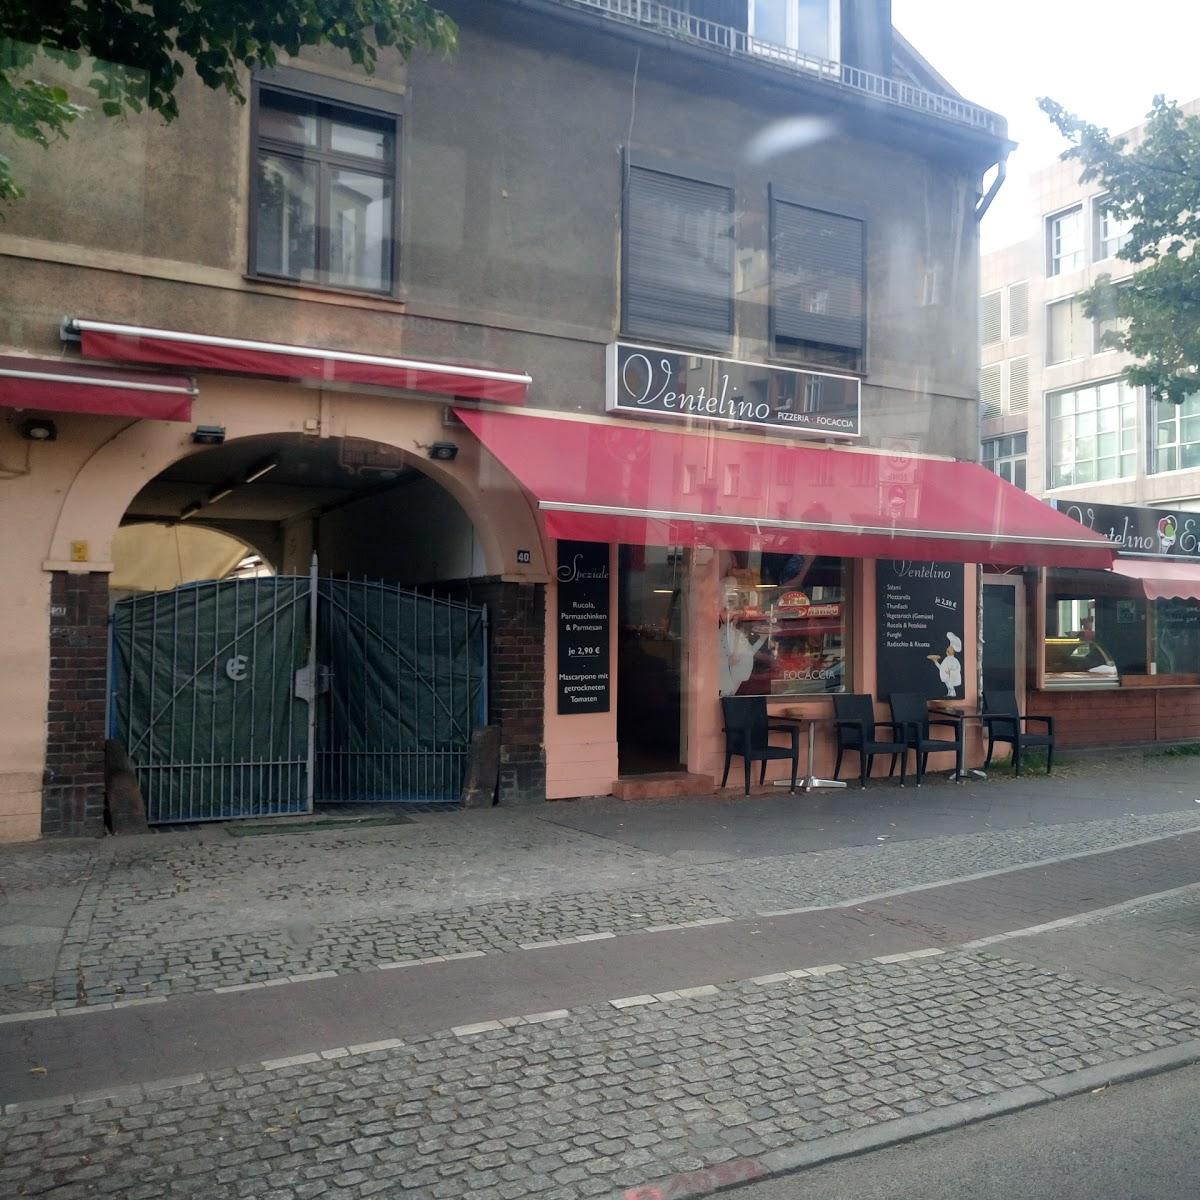 Restaurant "Pizzeria Ventelino" in Berlin